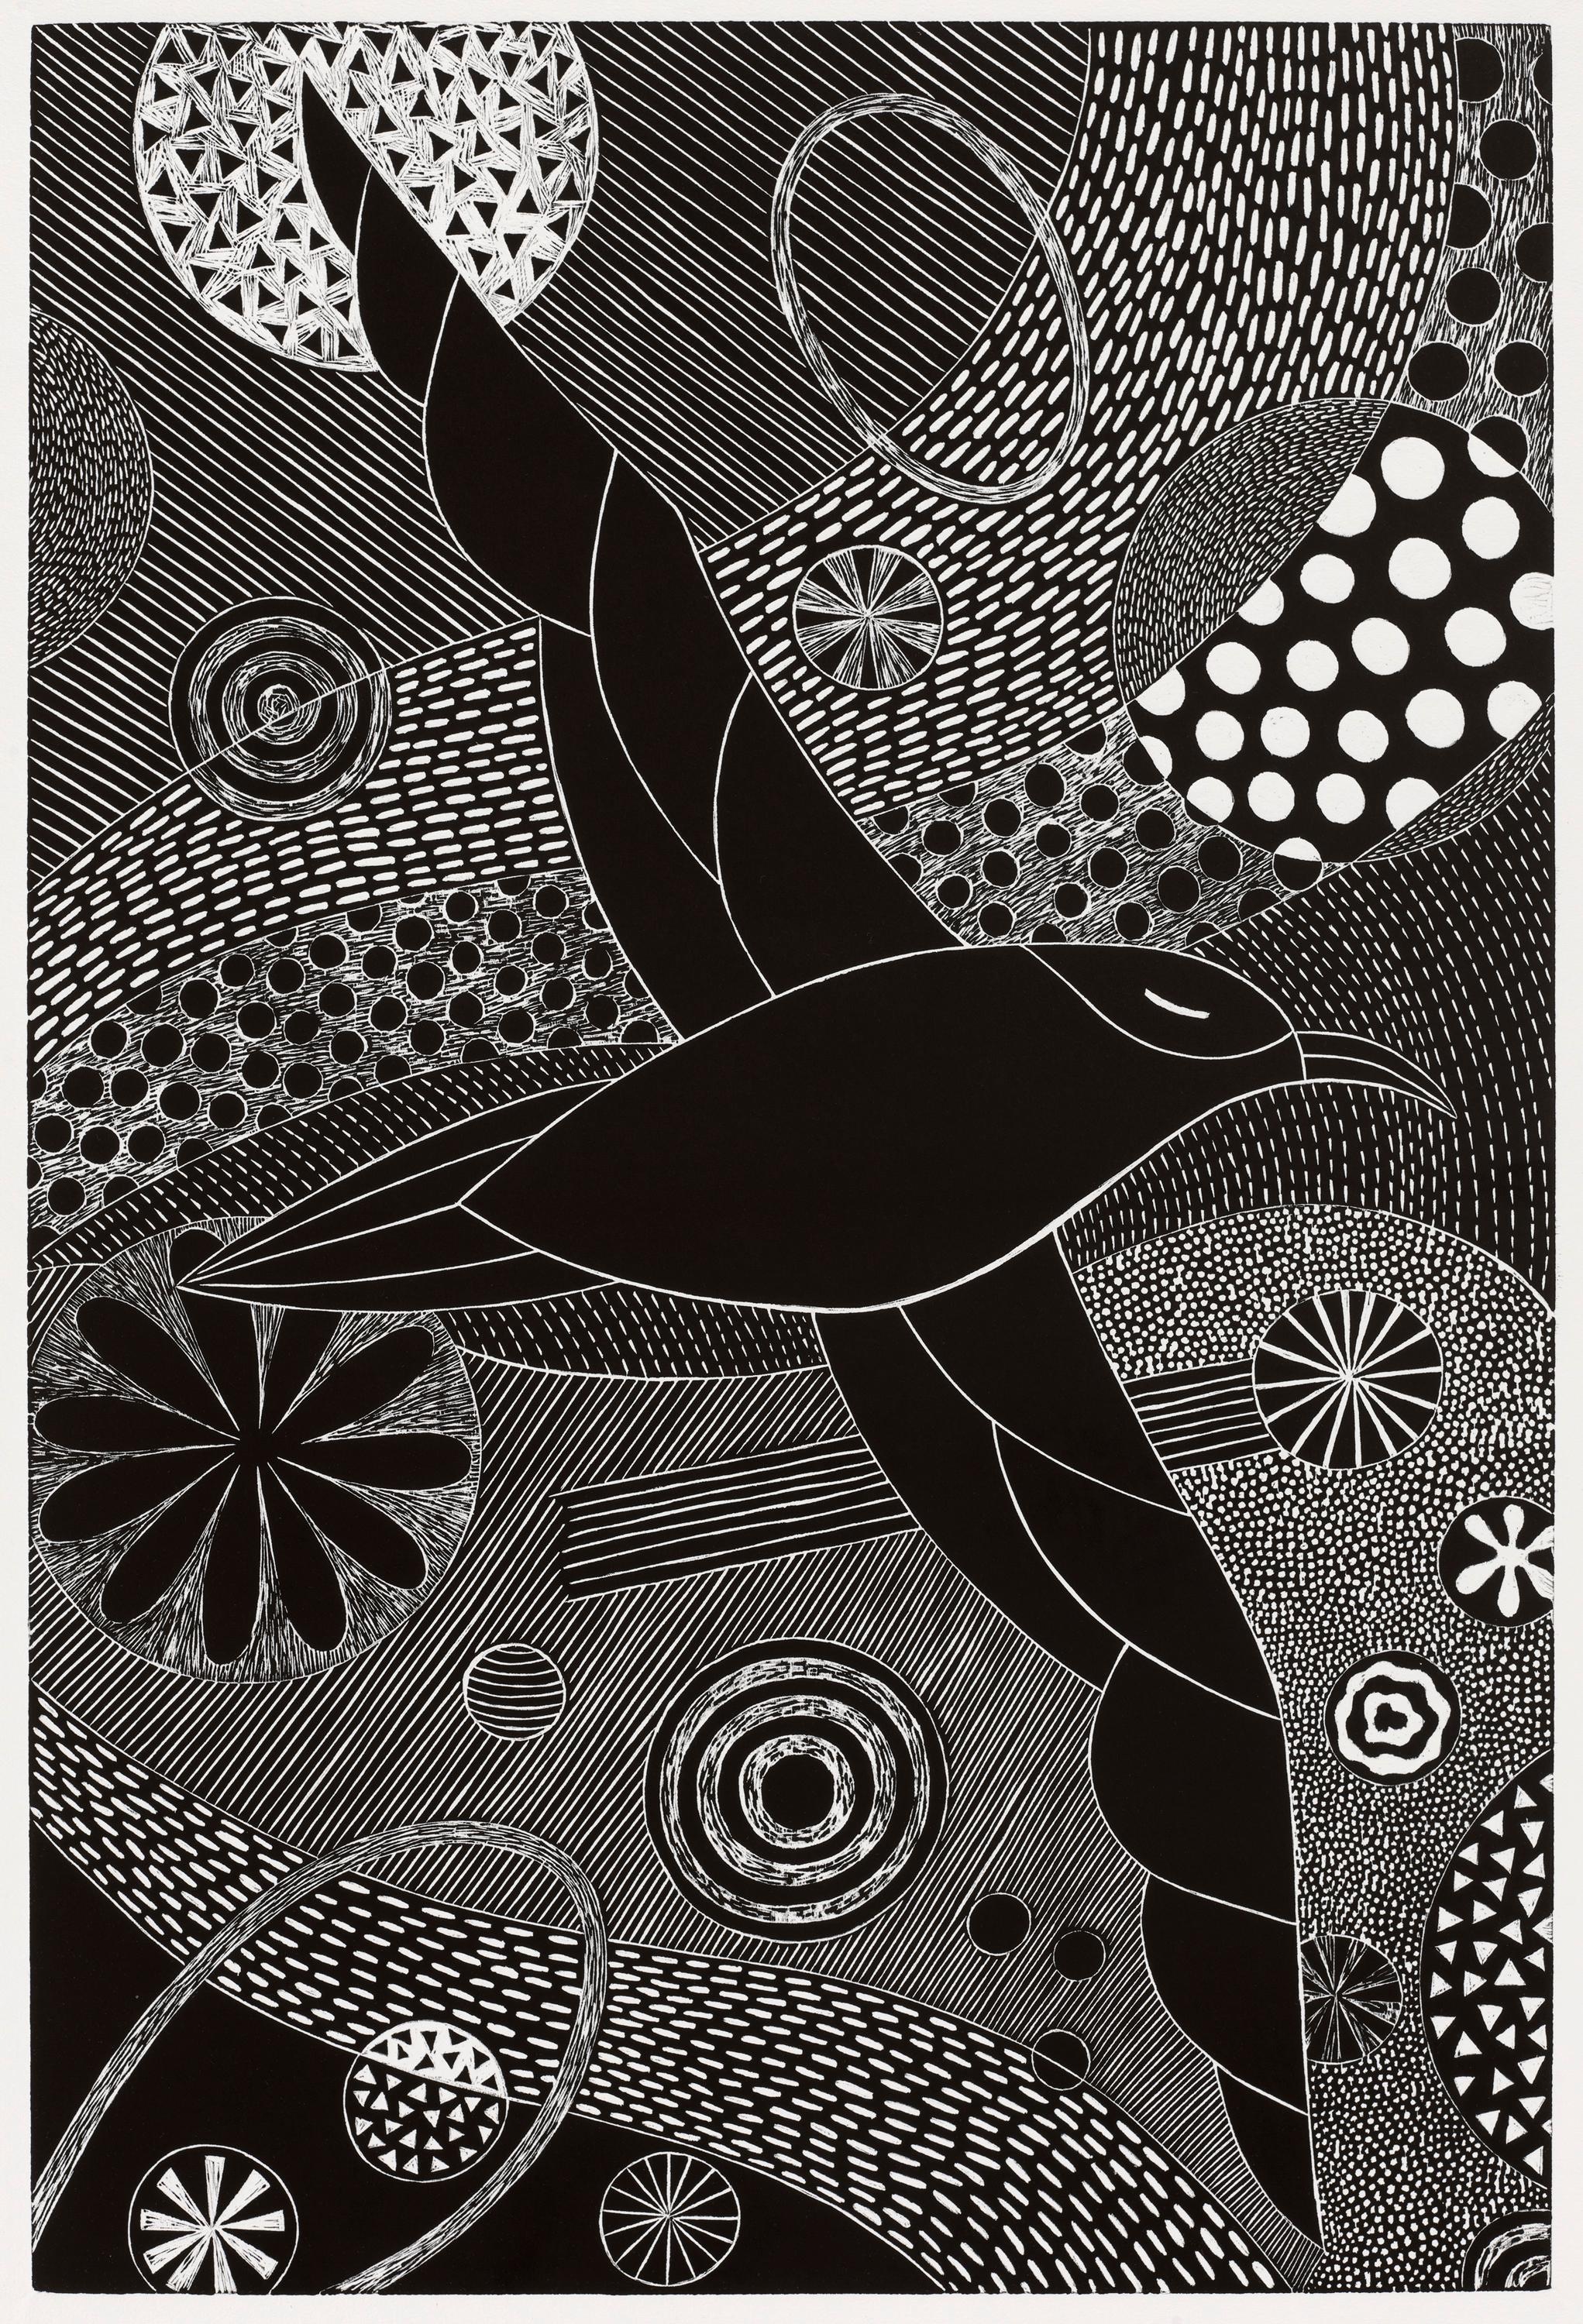 Lisa Houck Animal Print - 'Soaring and Surfing'  Folk inspired black/white woodcut print of bird in flight